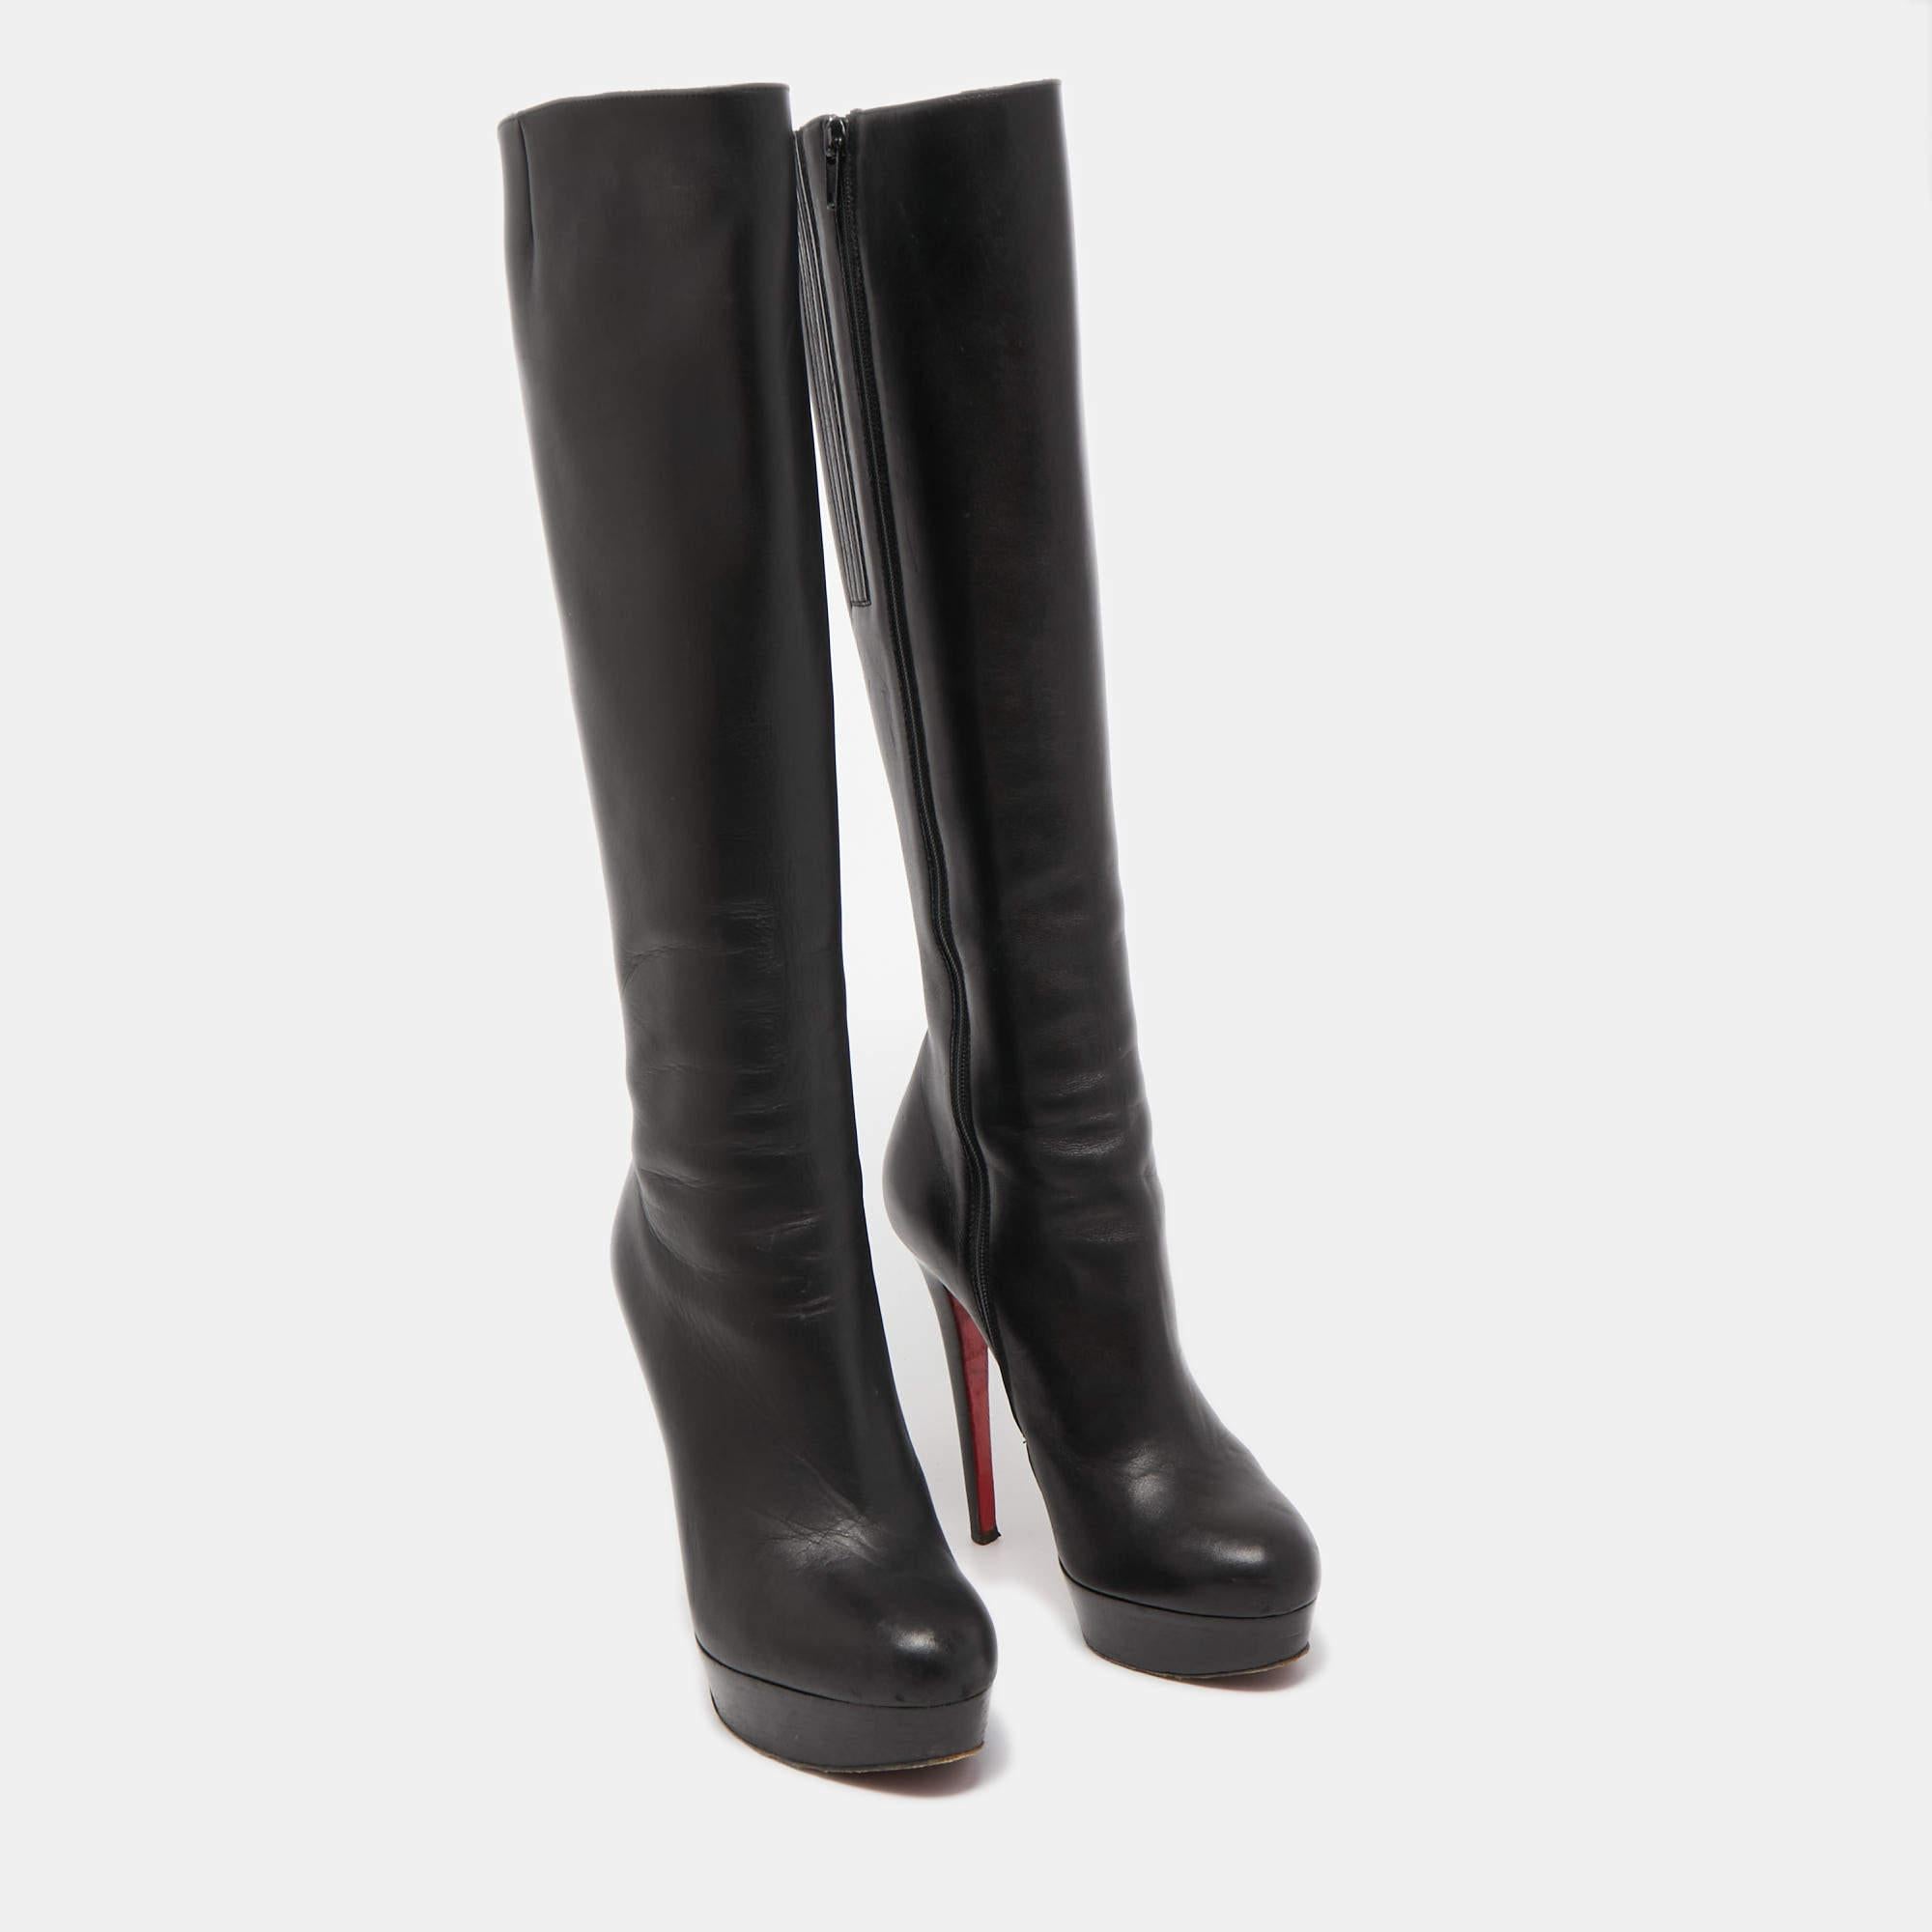 Women's Christian Louboutin Black Leather Bianca Botta Knee High Boots Size 37